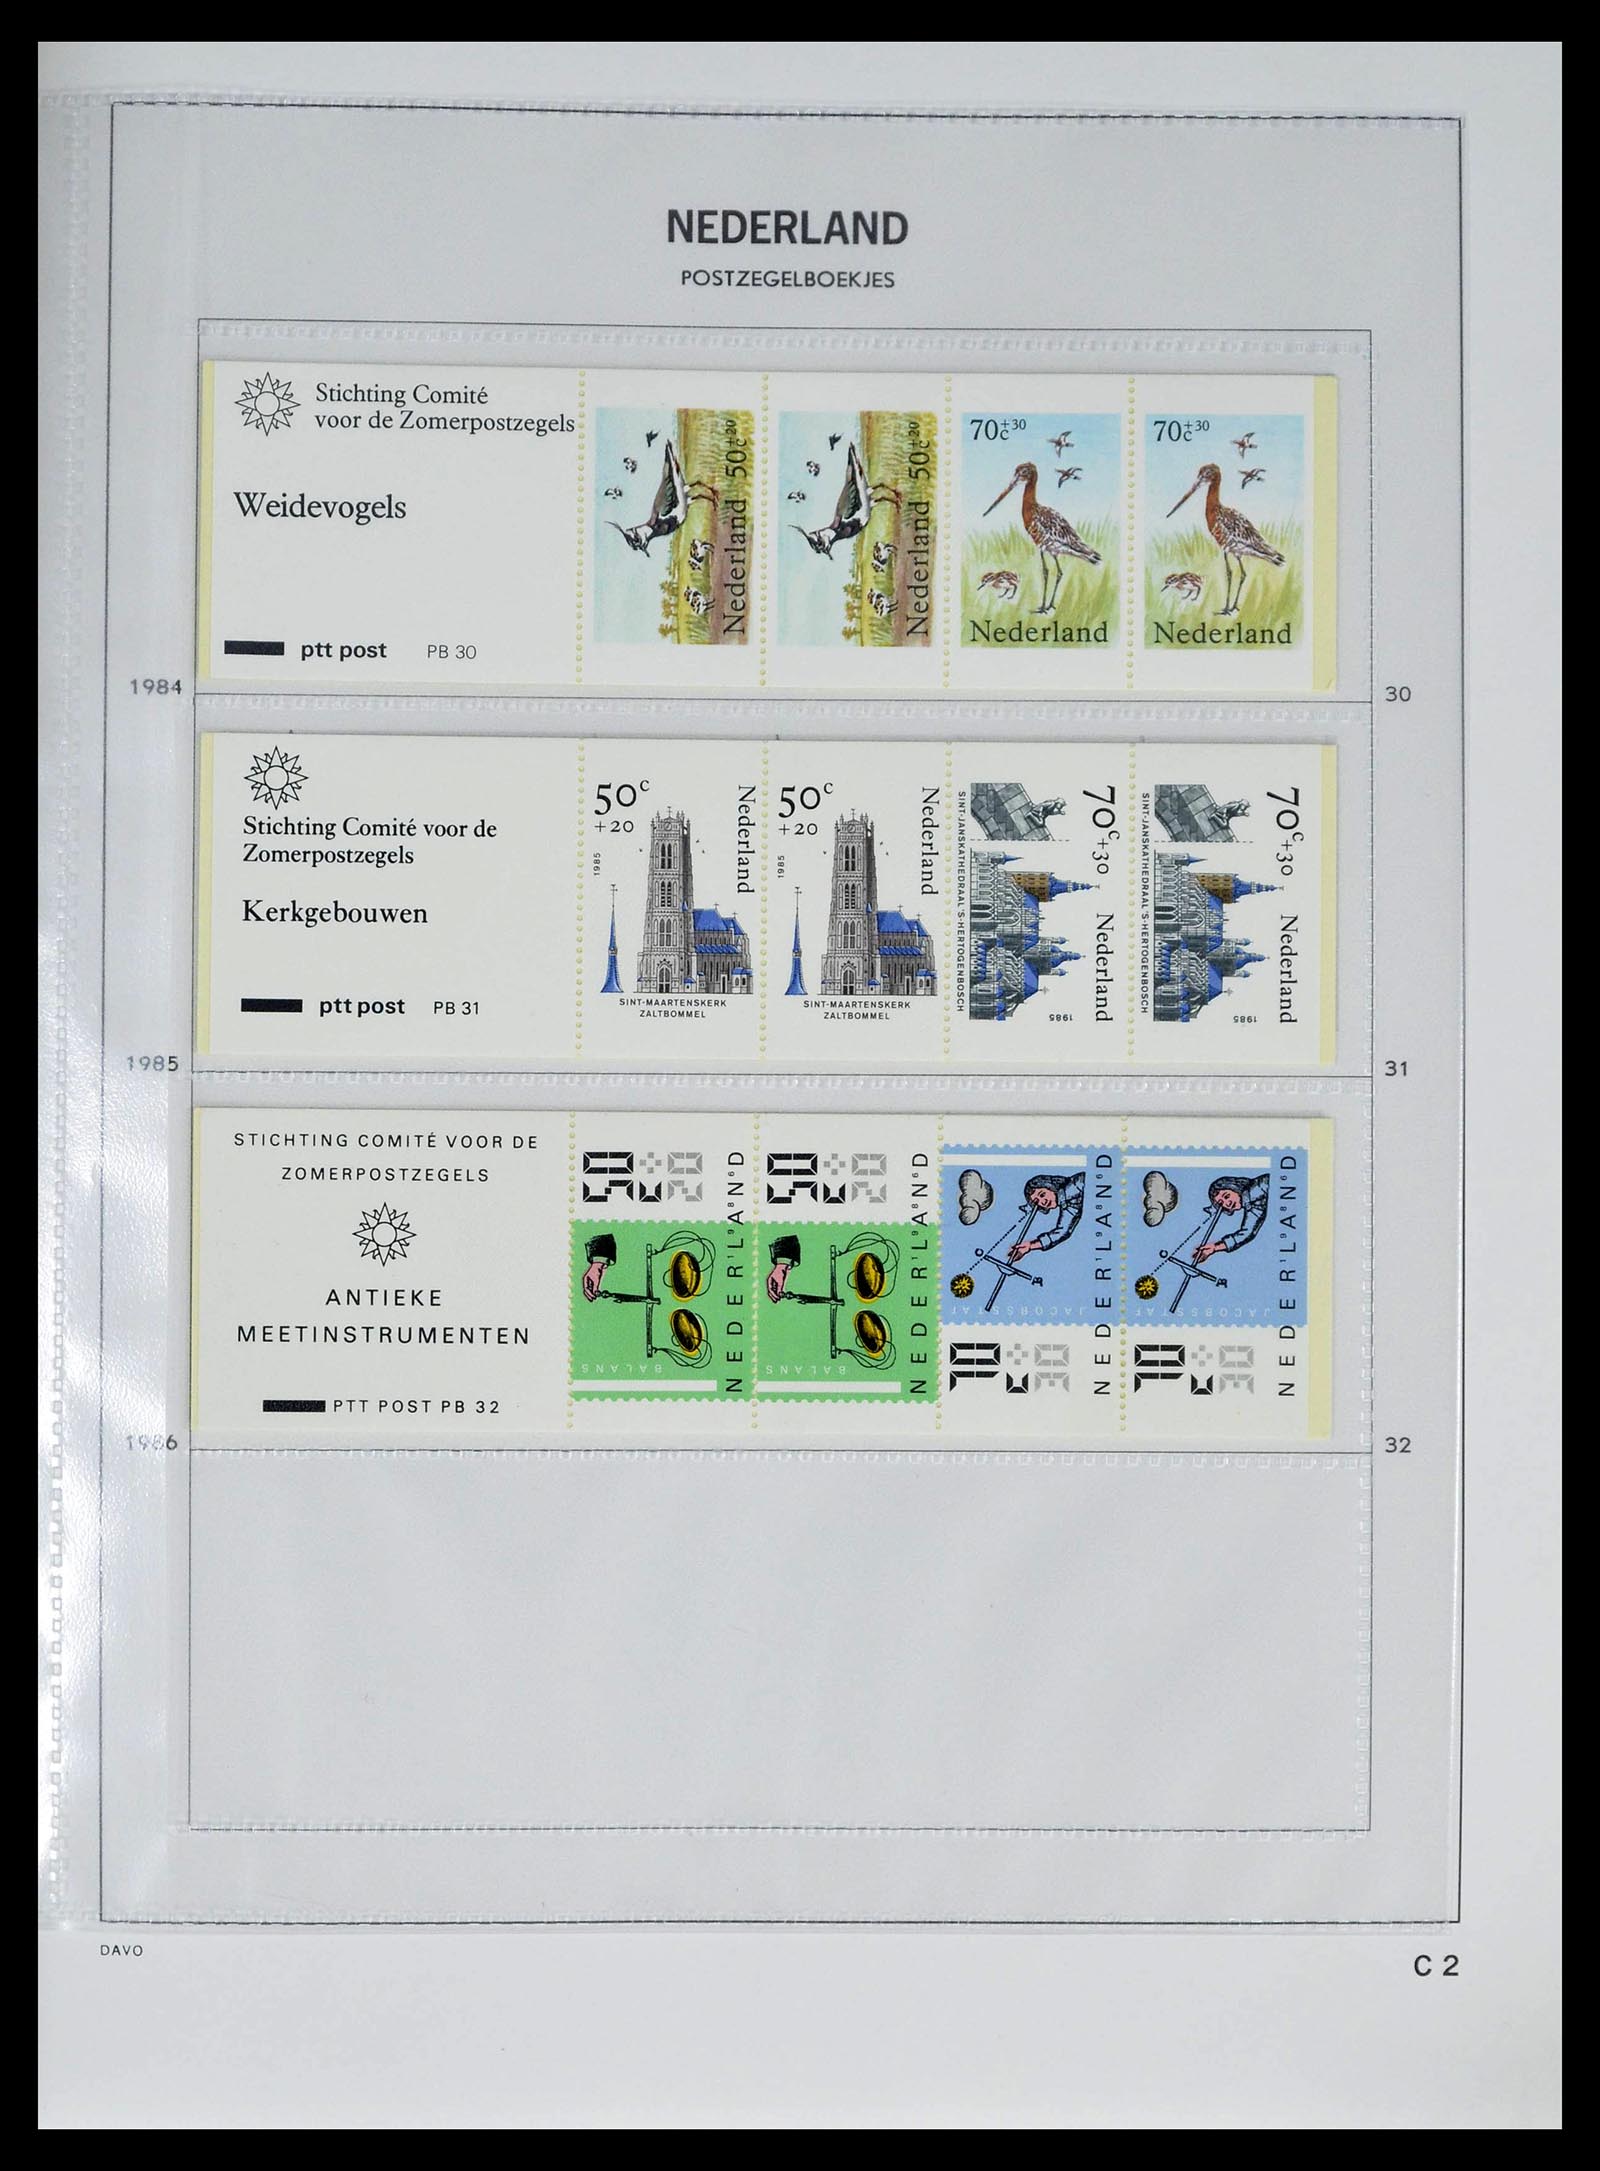 39362 0023 - Stamp collection 39362 Netherlands stamp booklets 1964-2003.